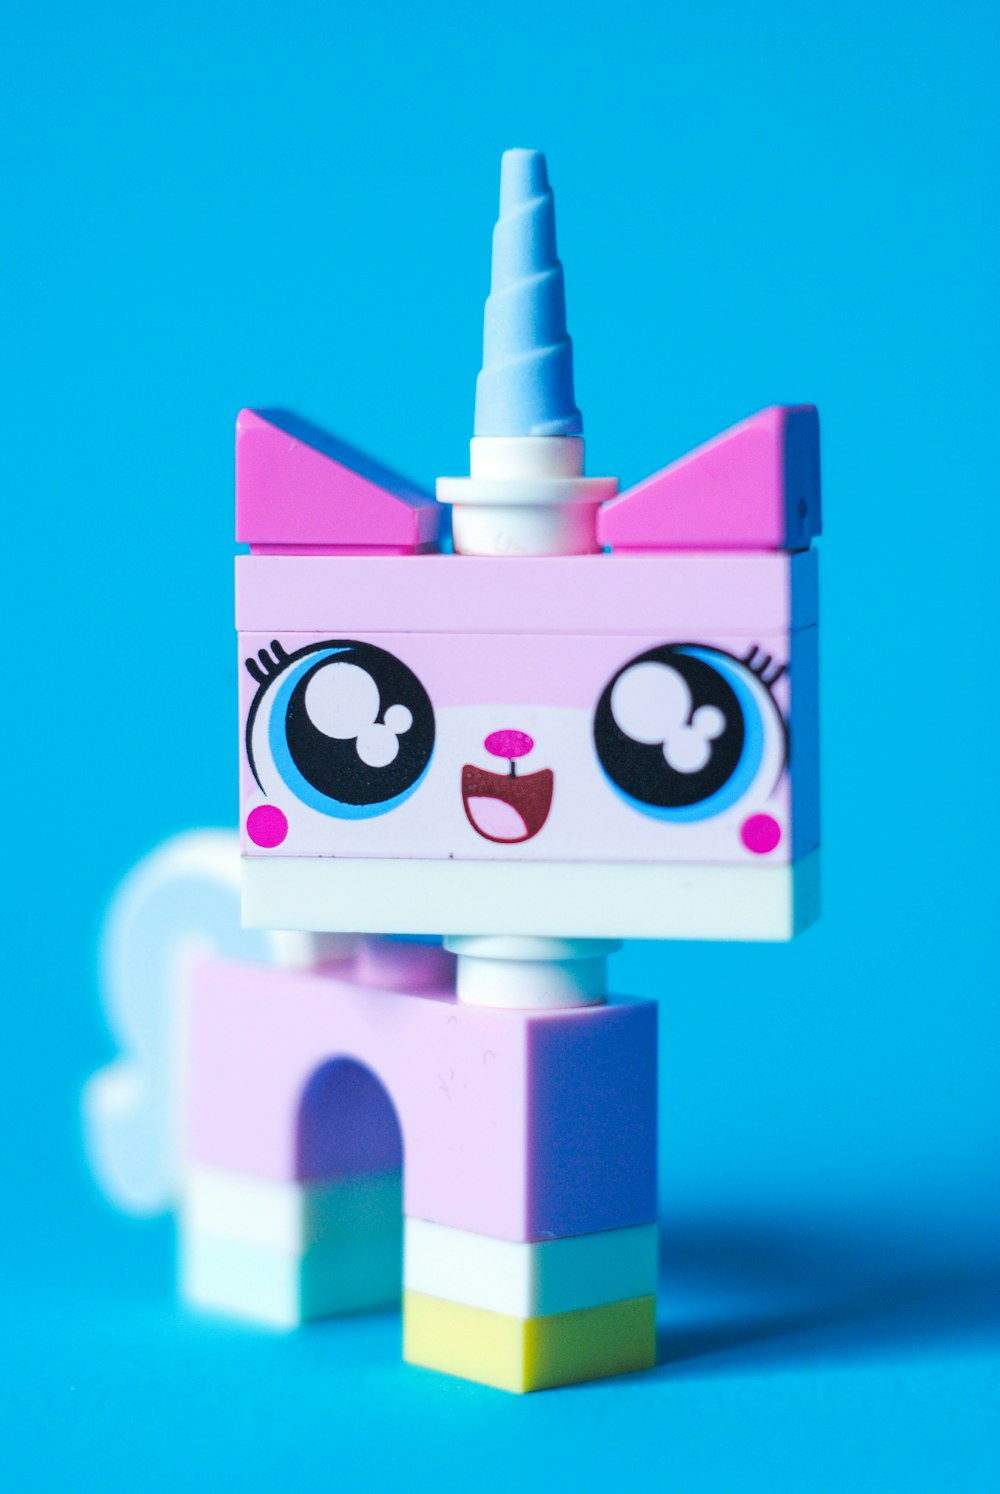 juguete lego unicornio rosa y blanco